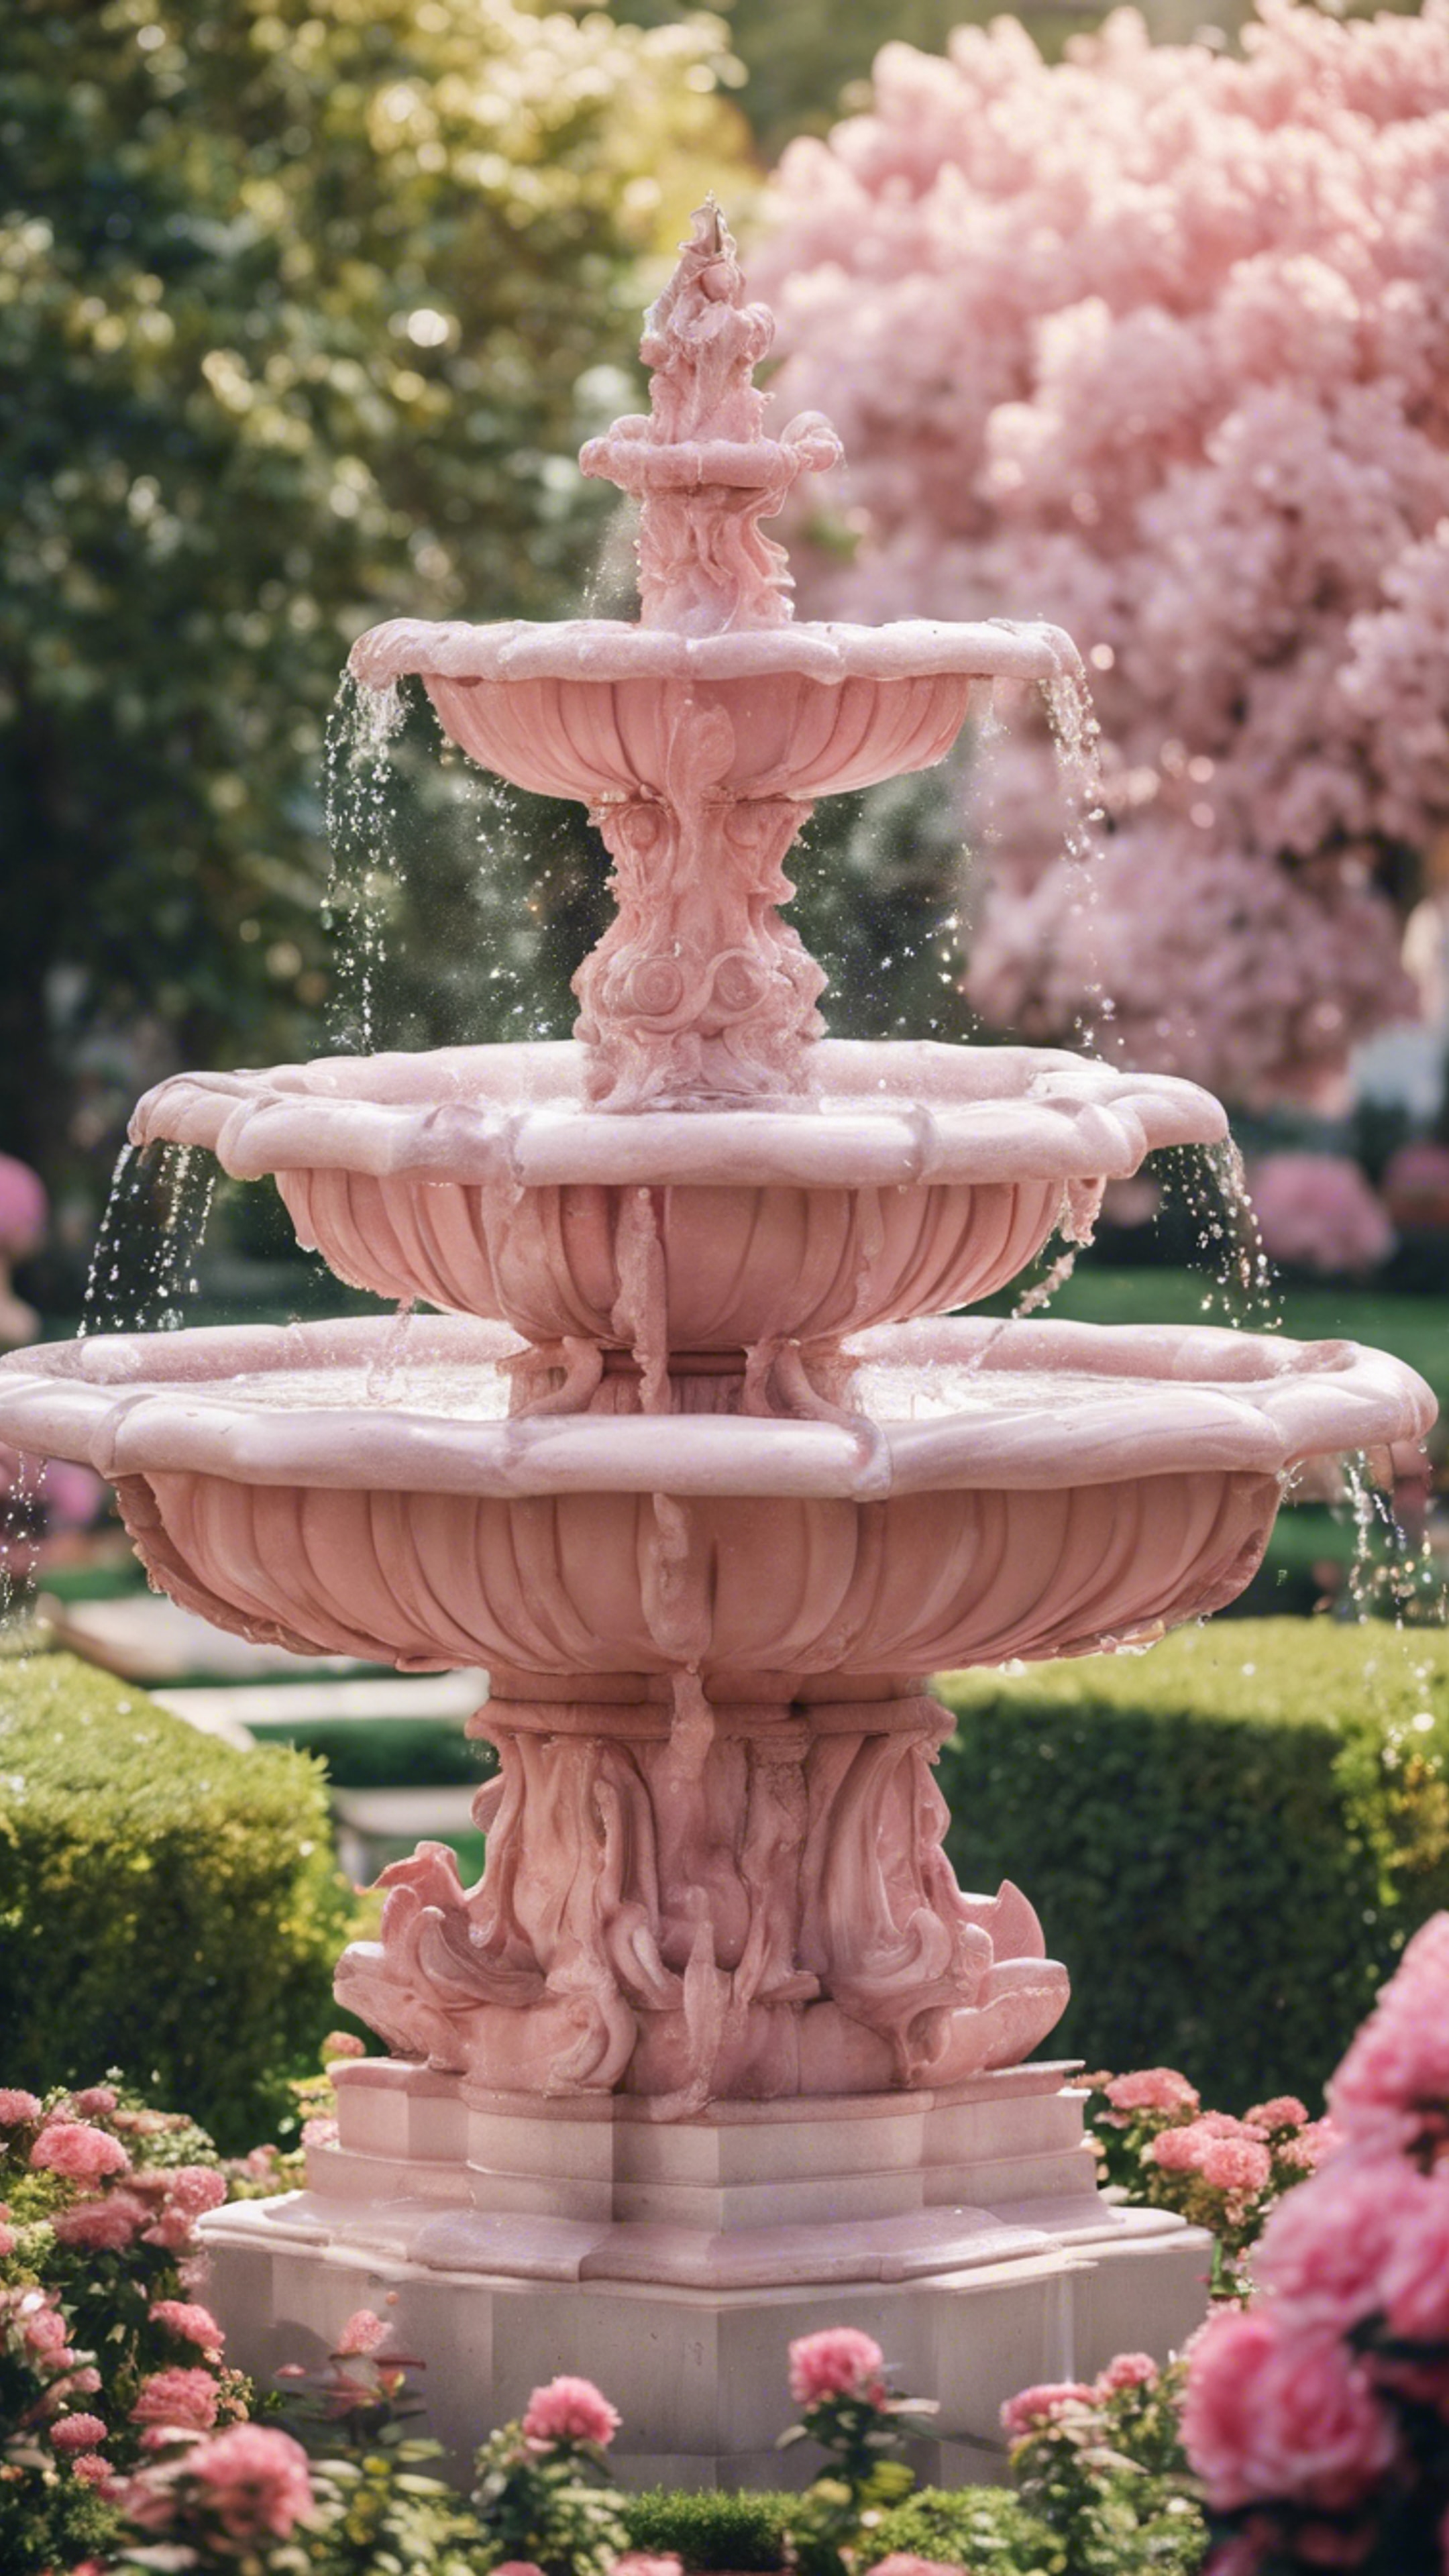 A fountain made of pink marble in an elegant flower garden. Hintergrund[73b566b49d564d04a87c]